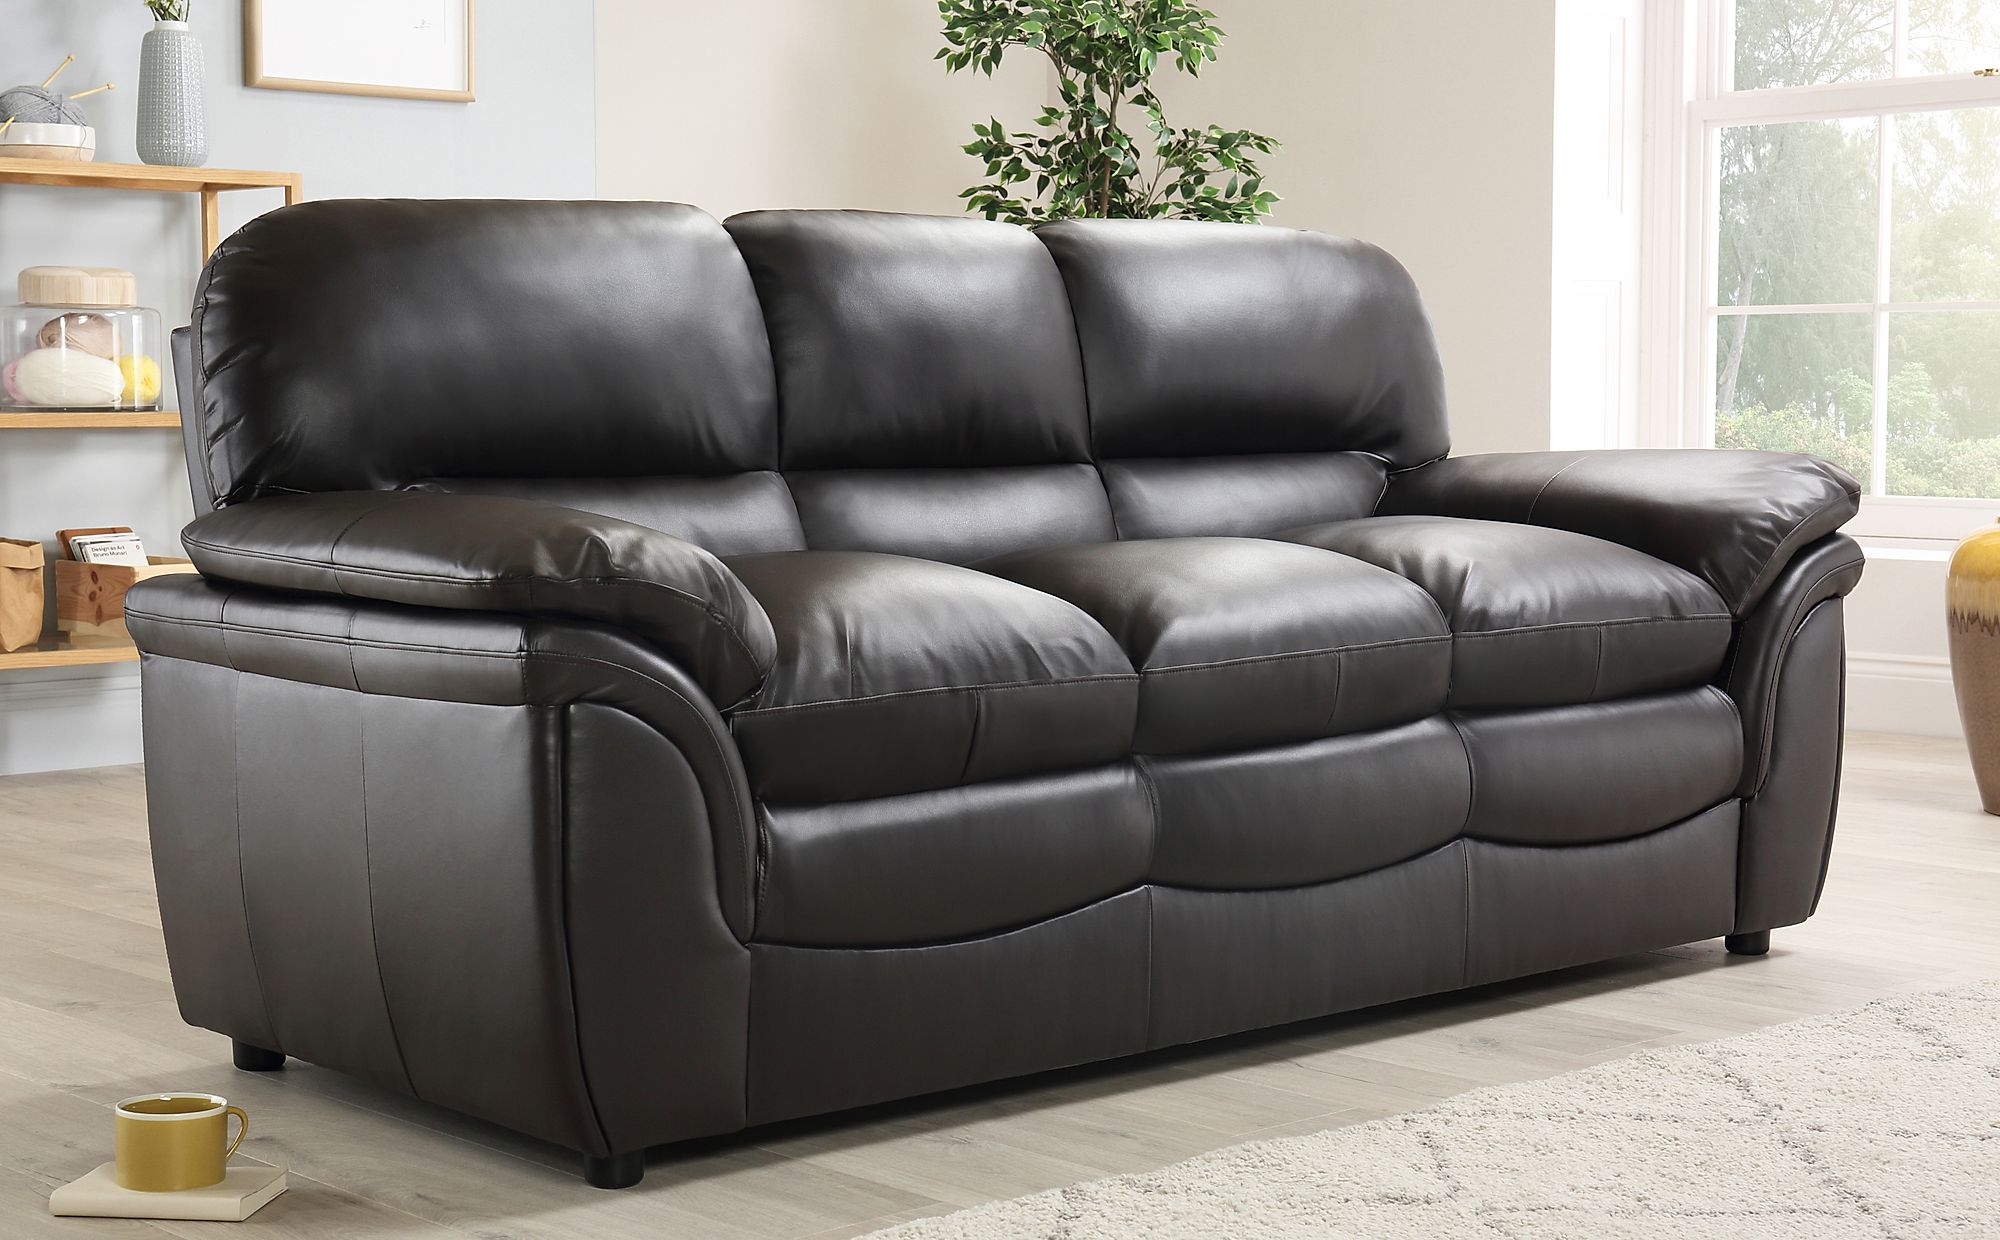 leather shine for sofa